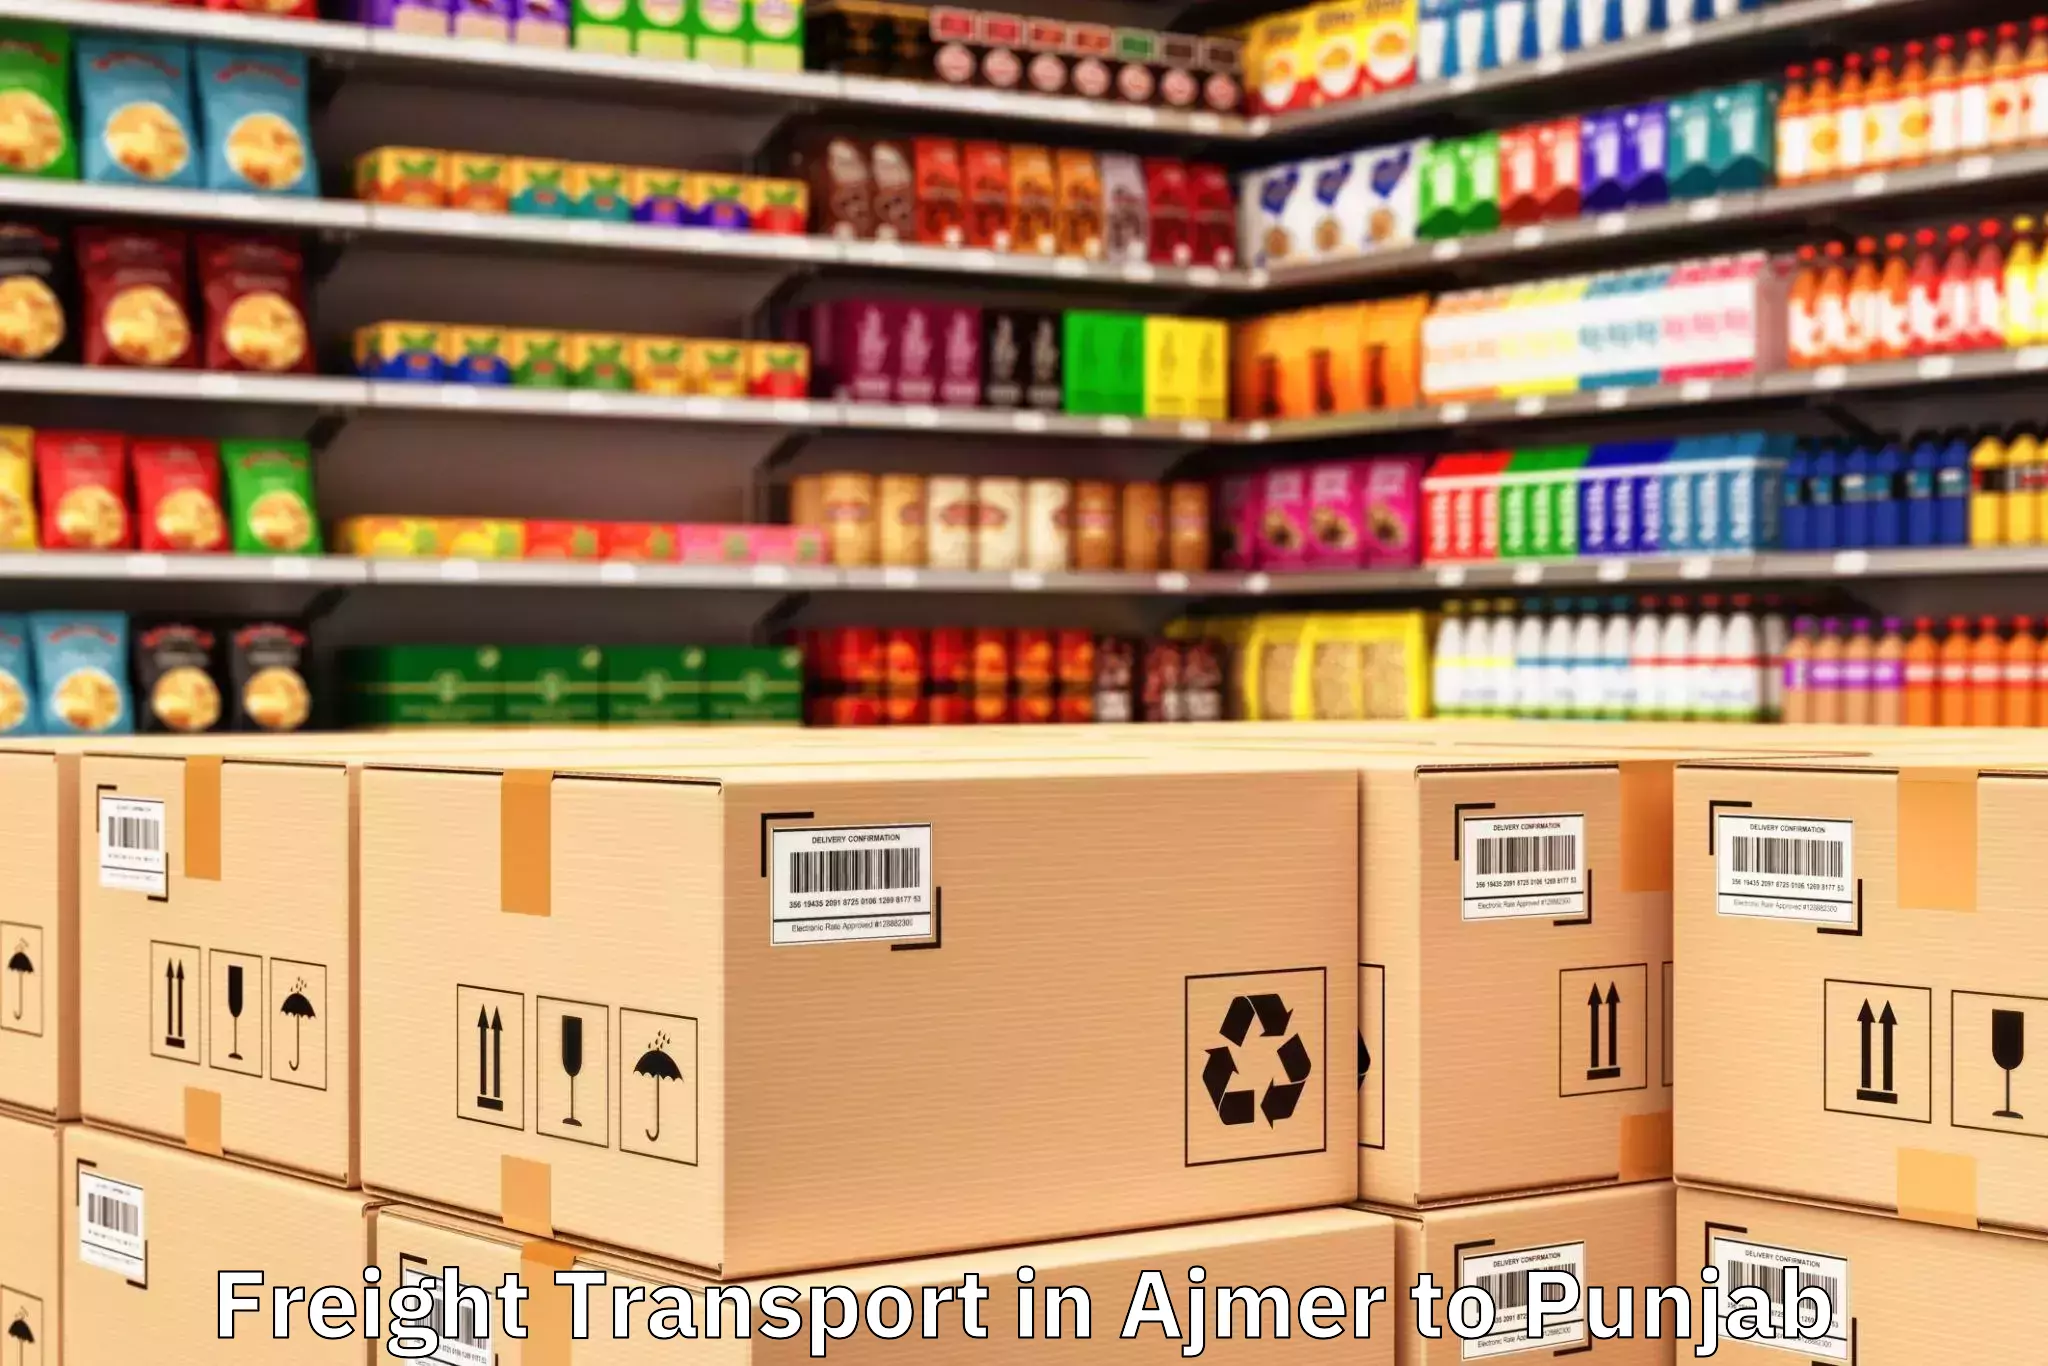 Ajmer to Punjab Freight Transport